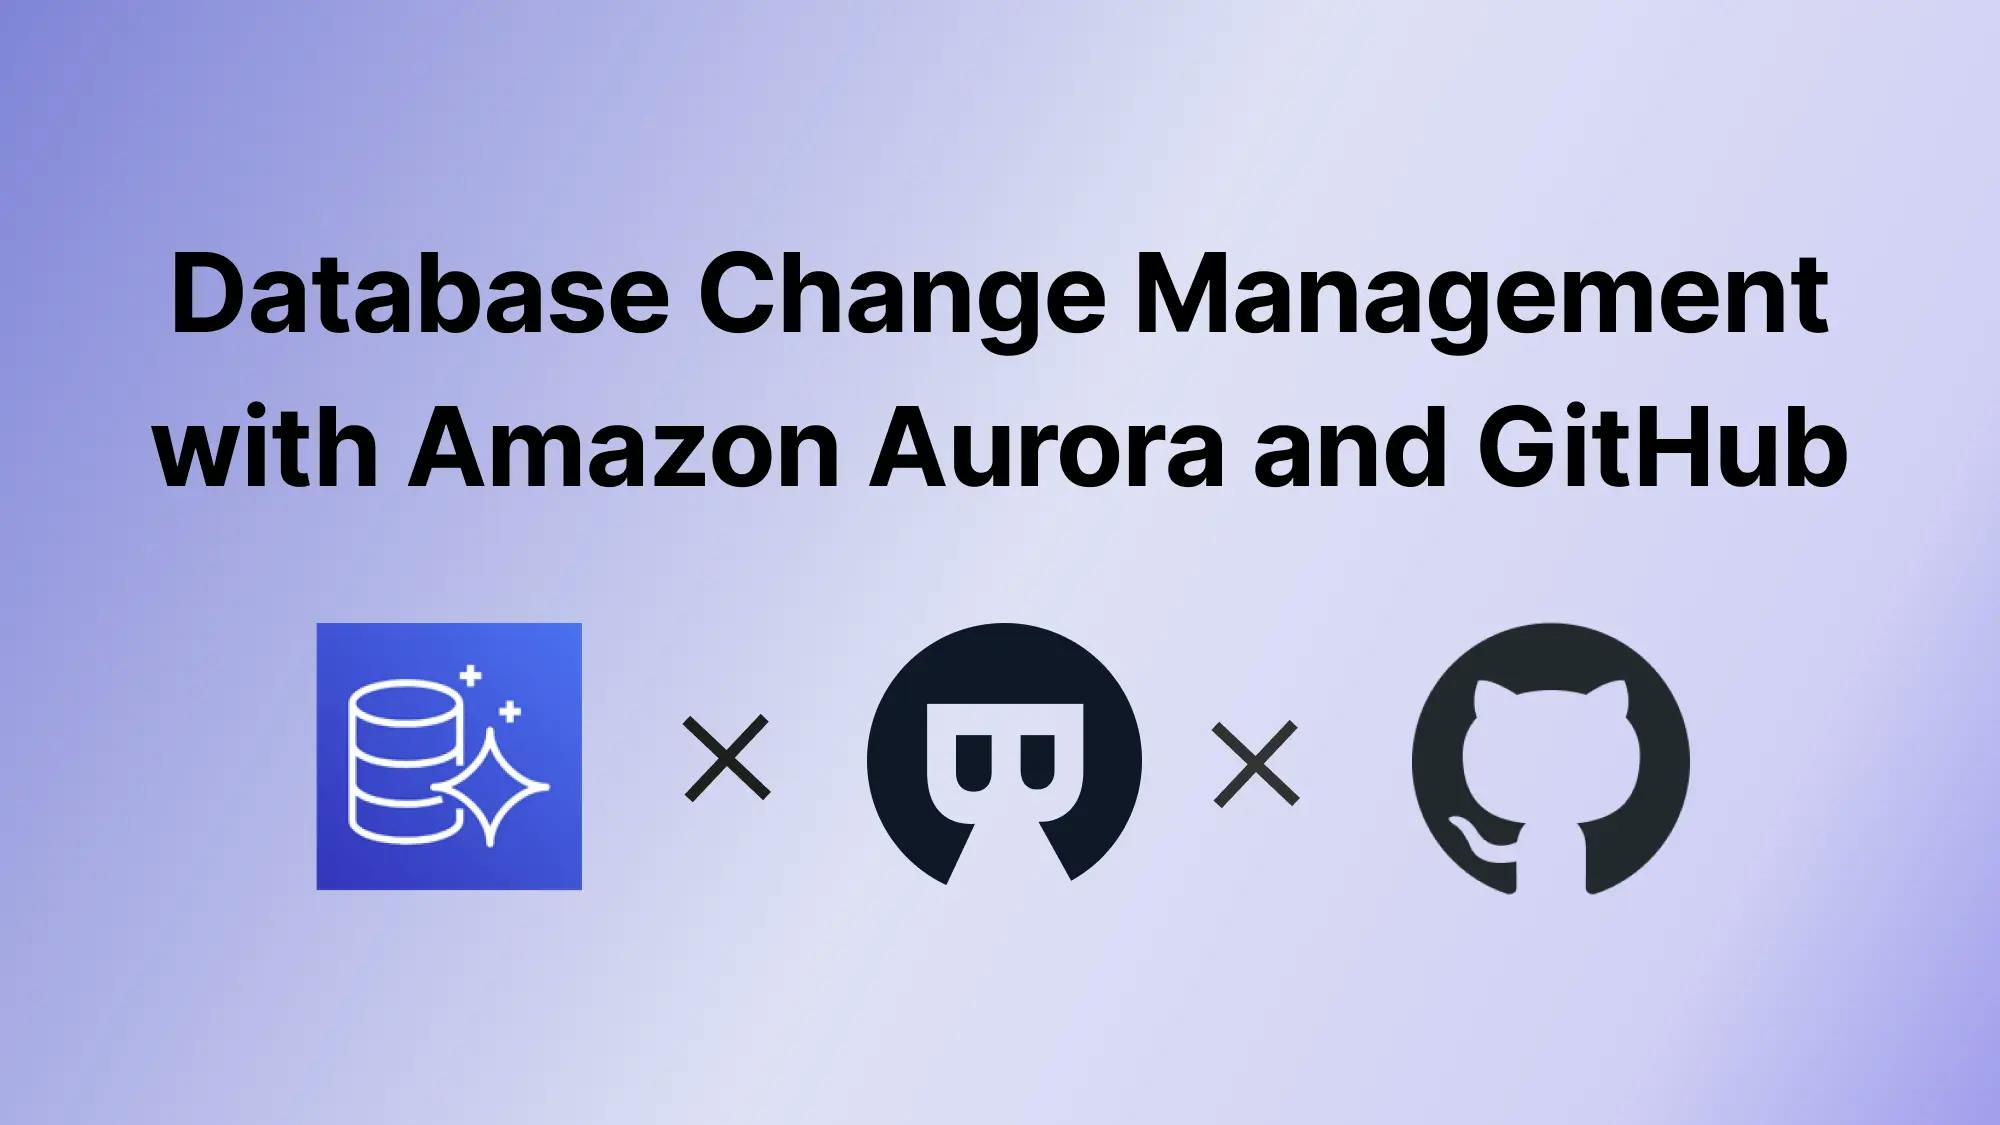 DevOps: Database Change Management with Amazon Aurora and GitHub